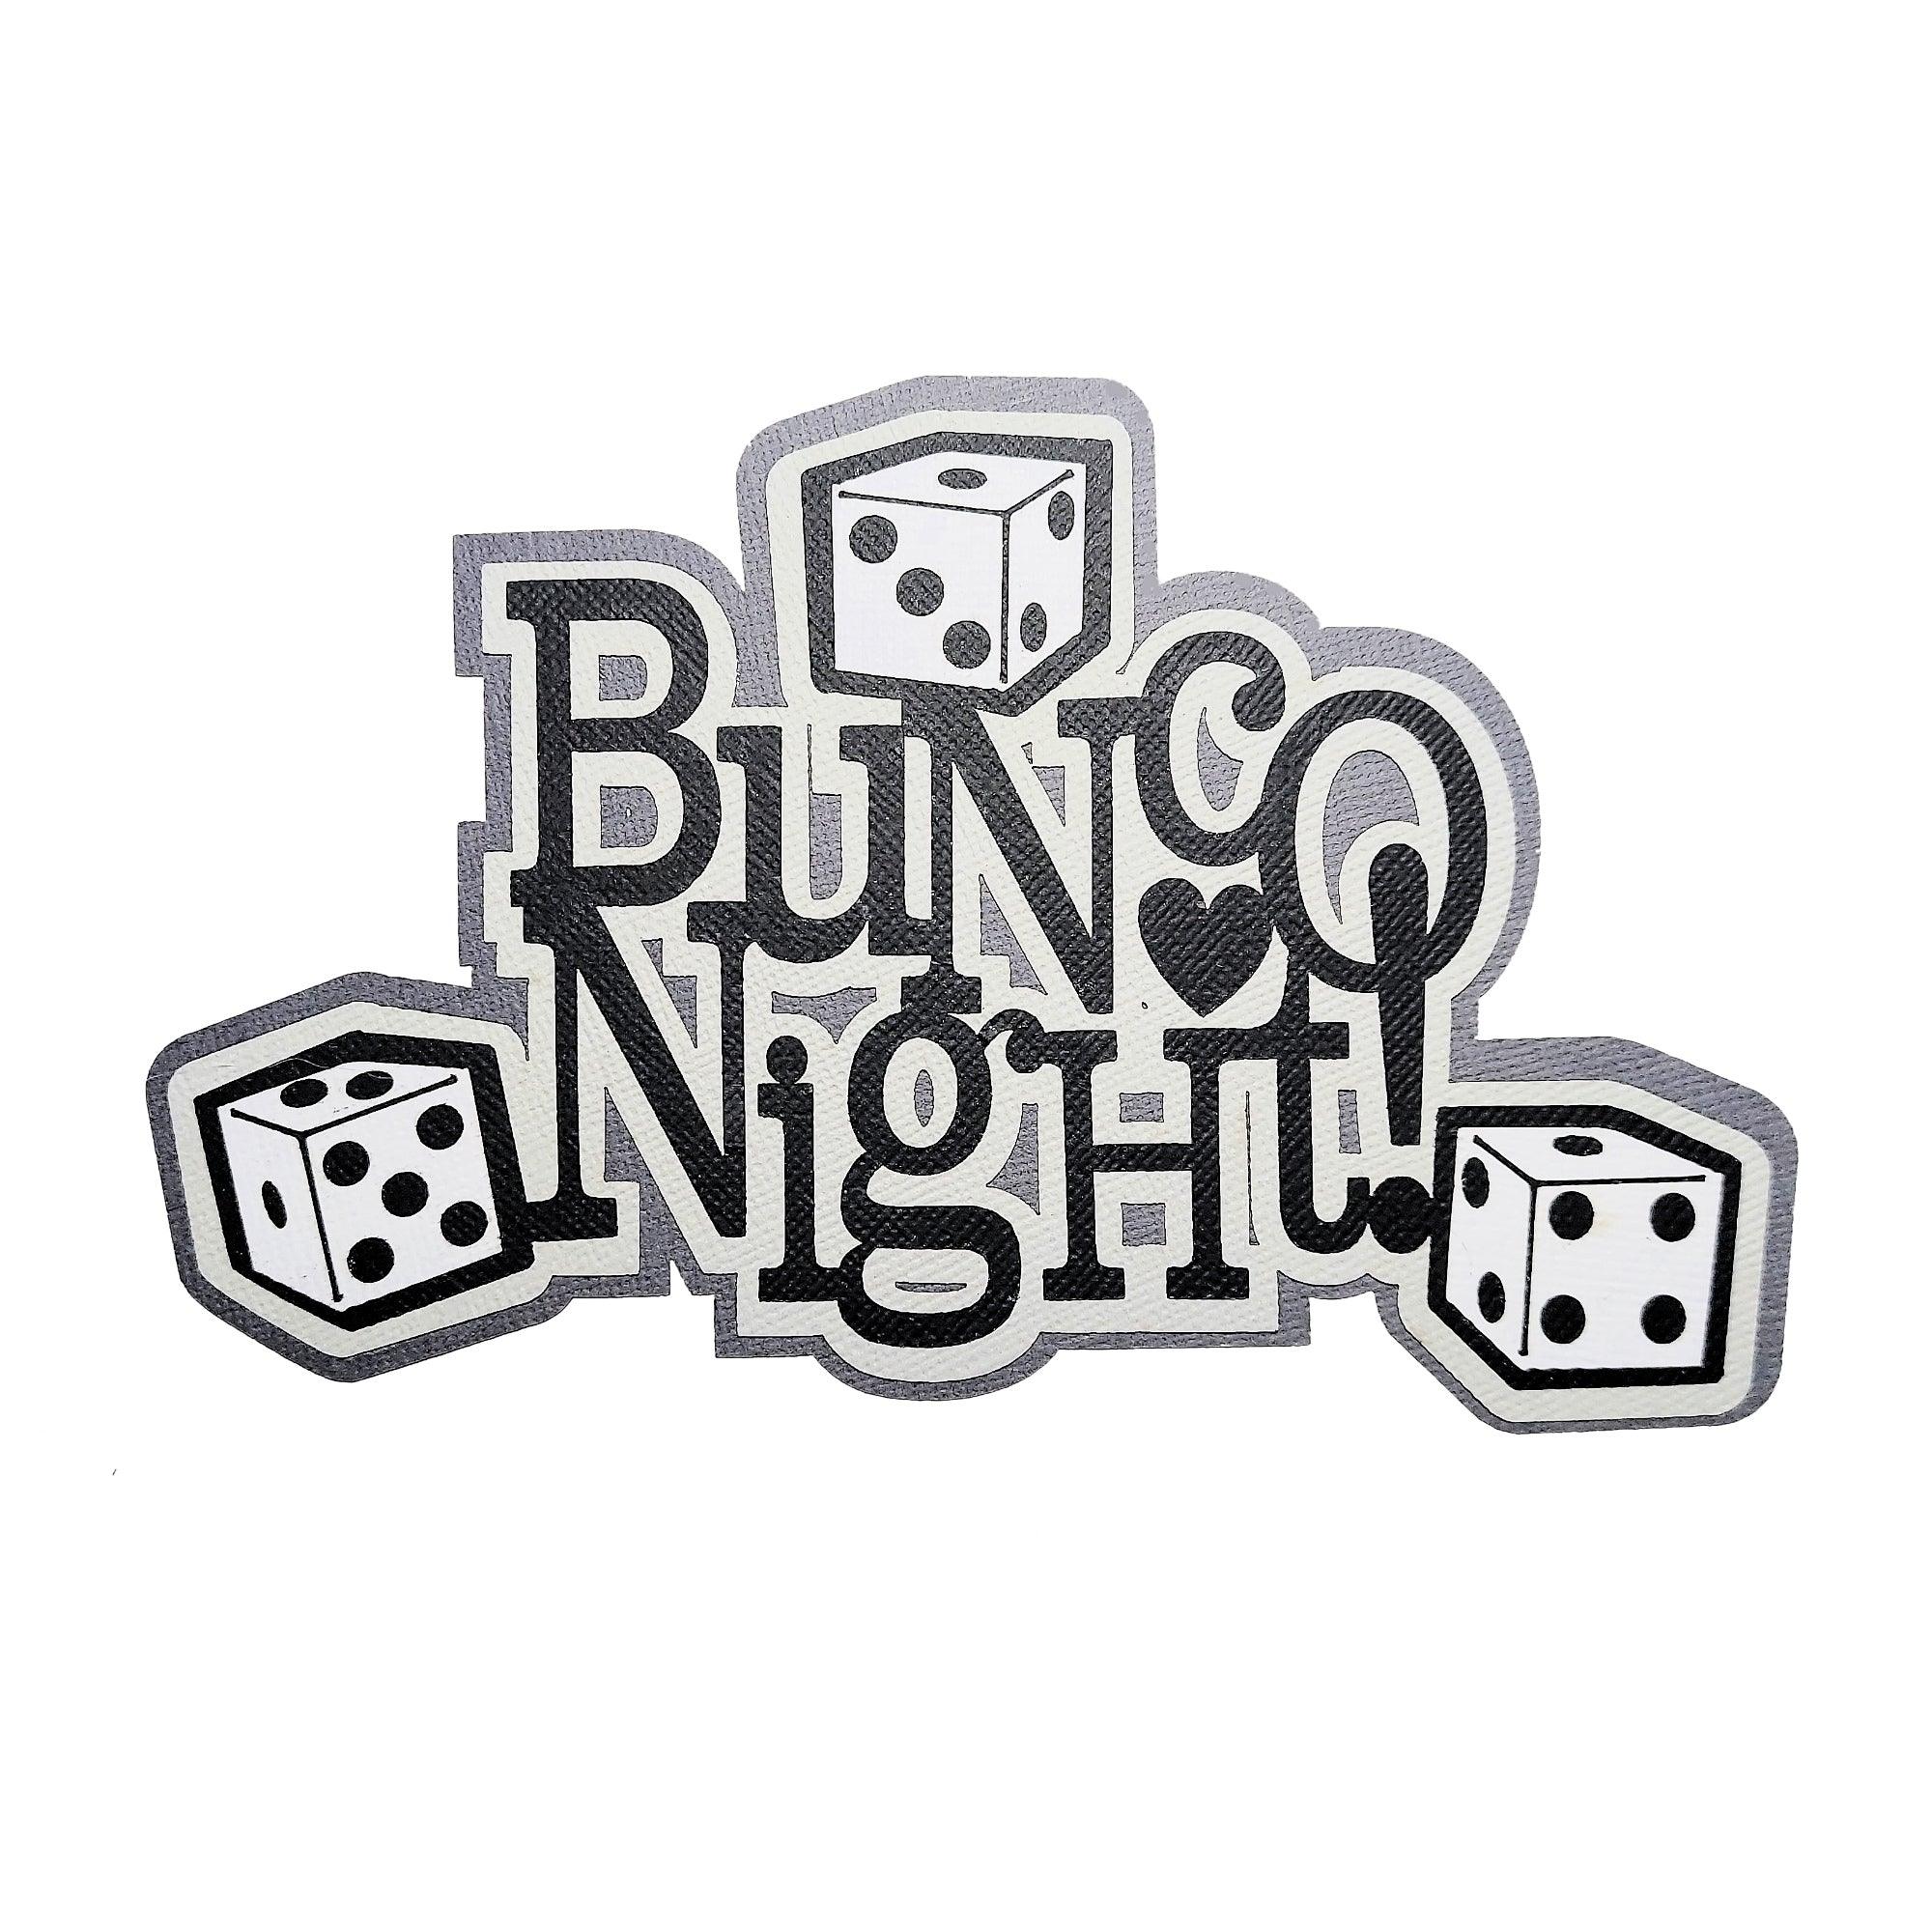 Bunco Night Title & Dice Laser Die Cut Scrapbook Embellishment Set by SSC Designs